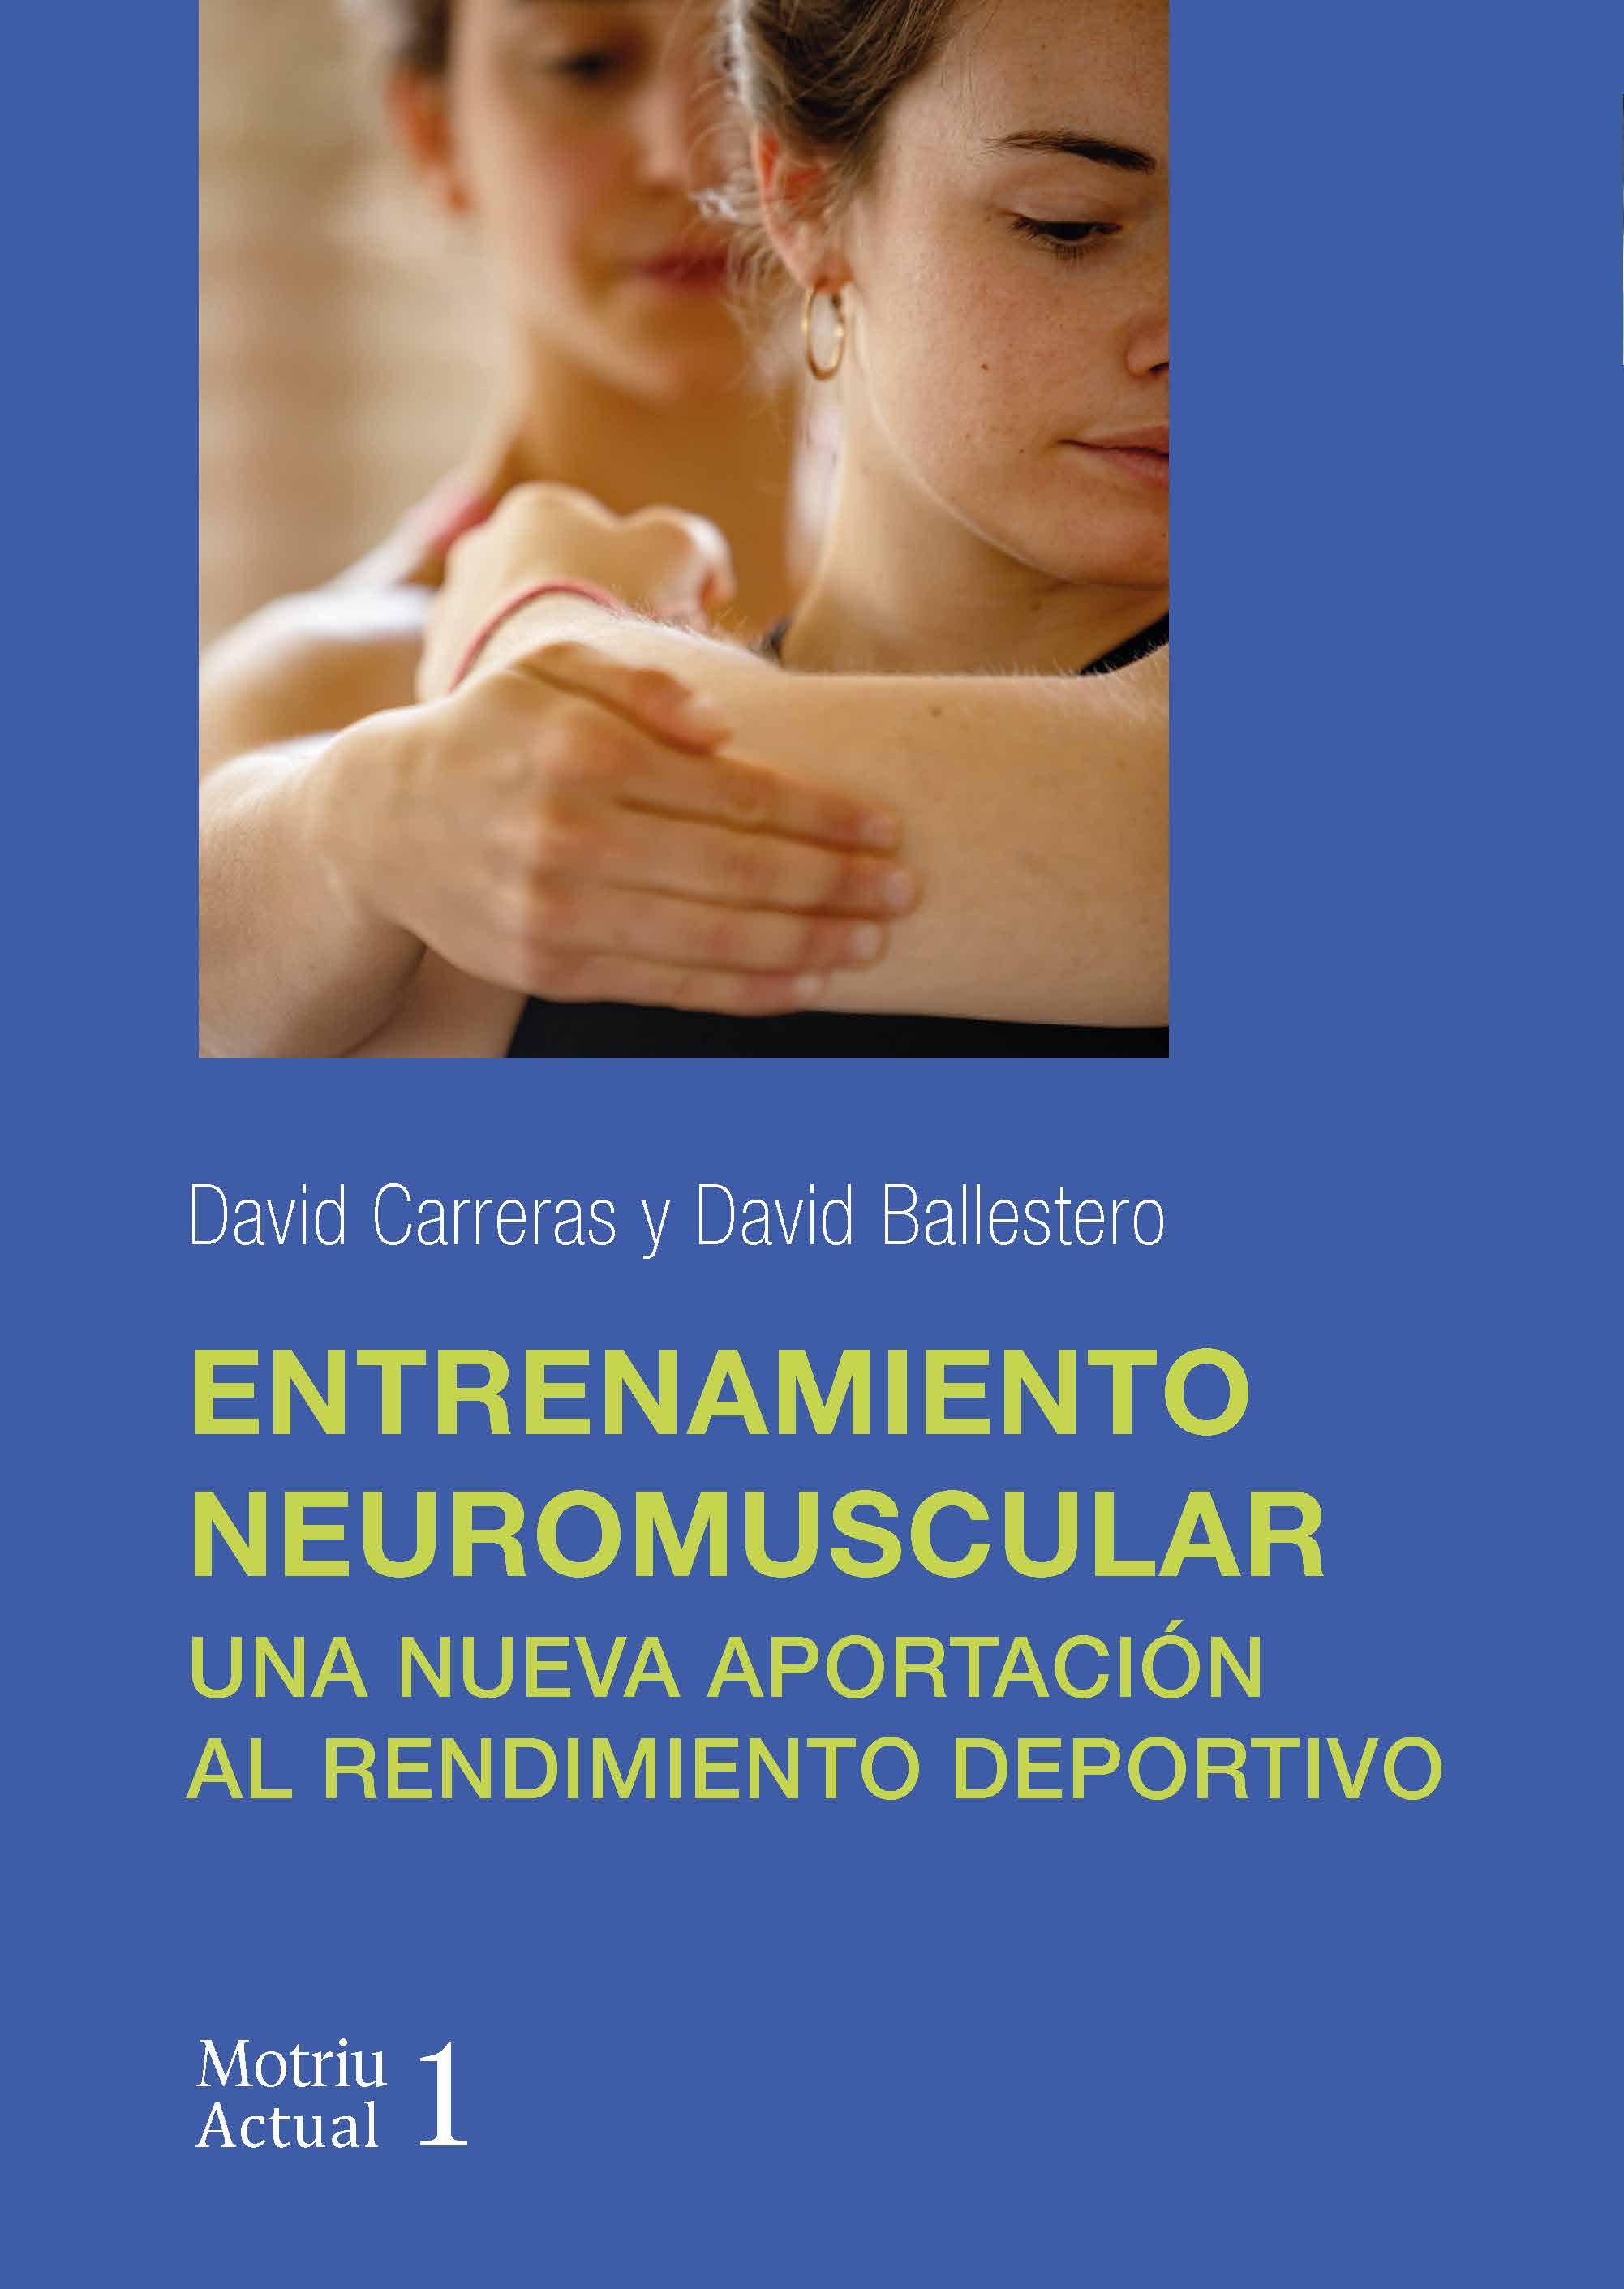 Entrenamiento neuromuscular